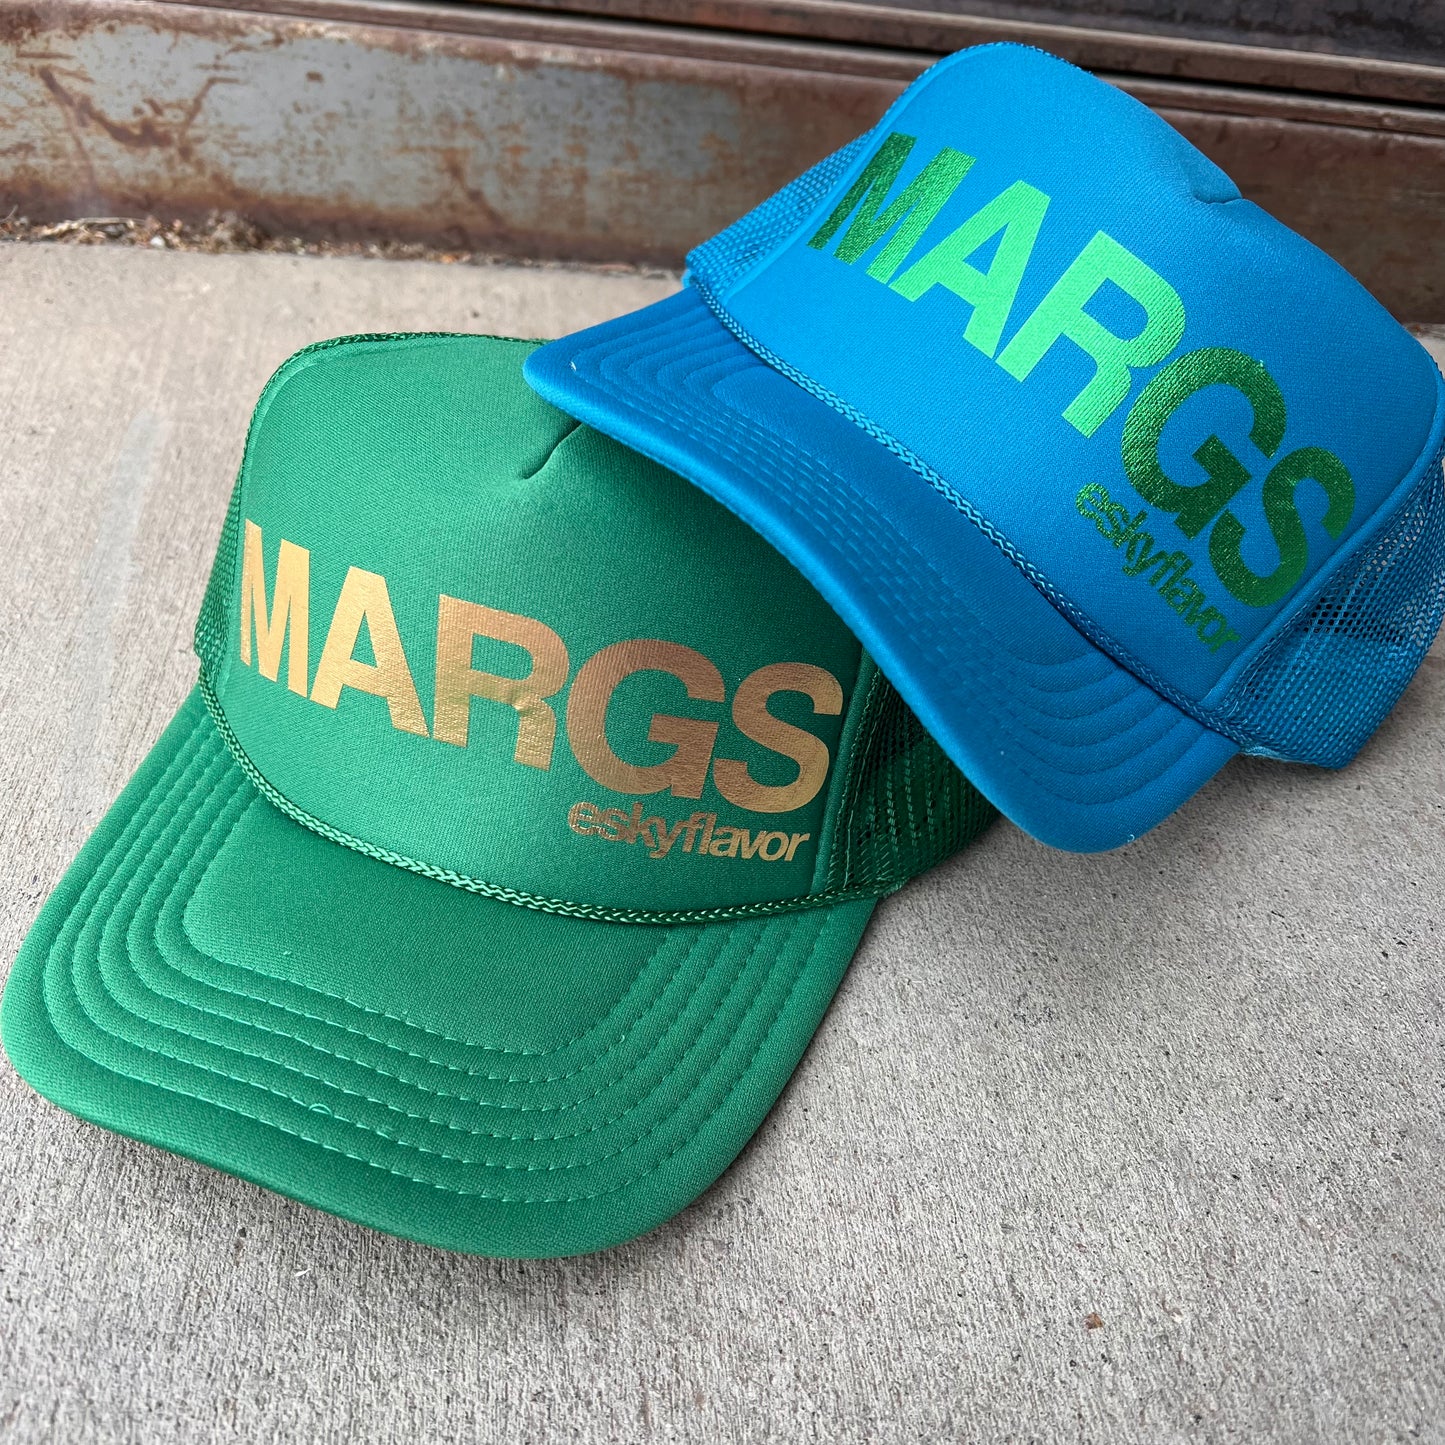 EskyFlavor MARGS Hat